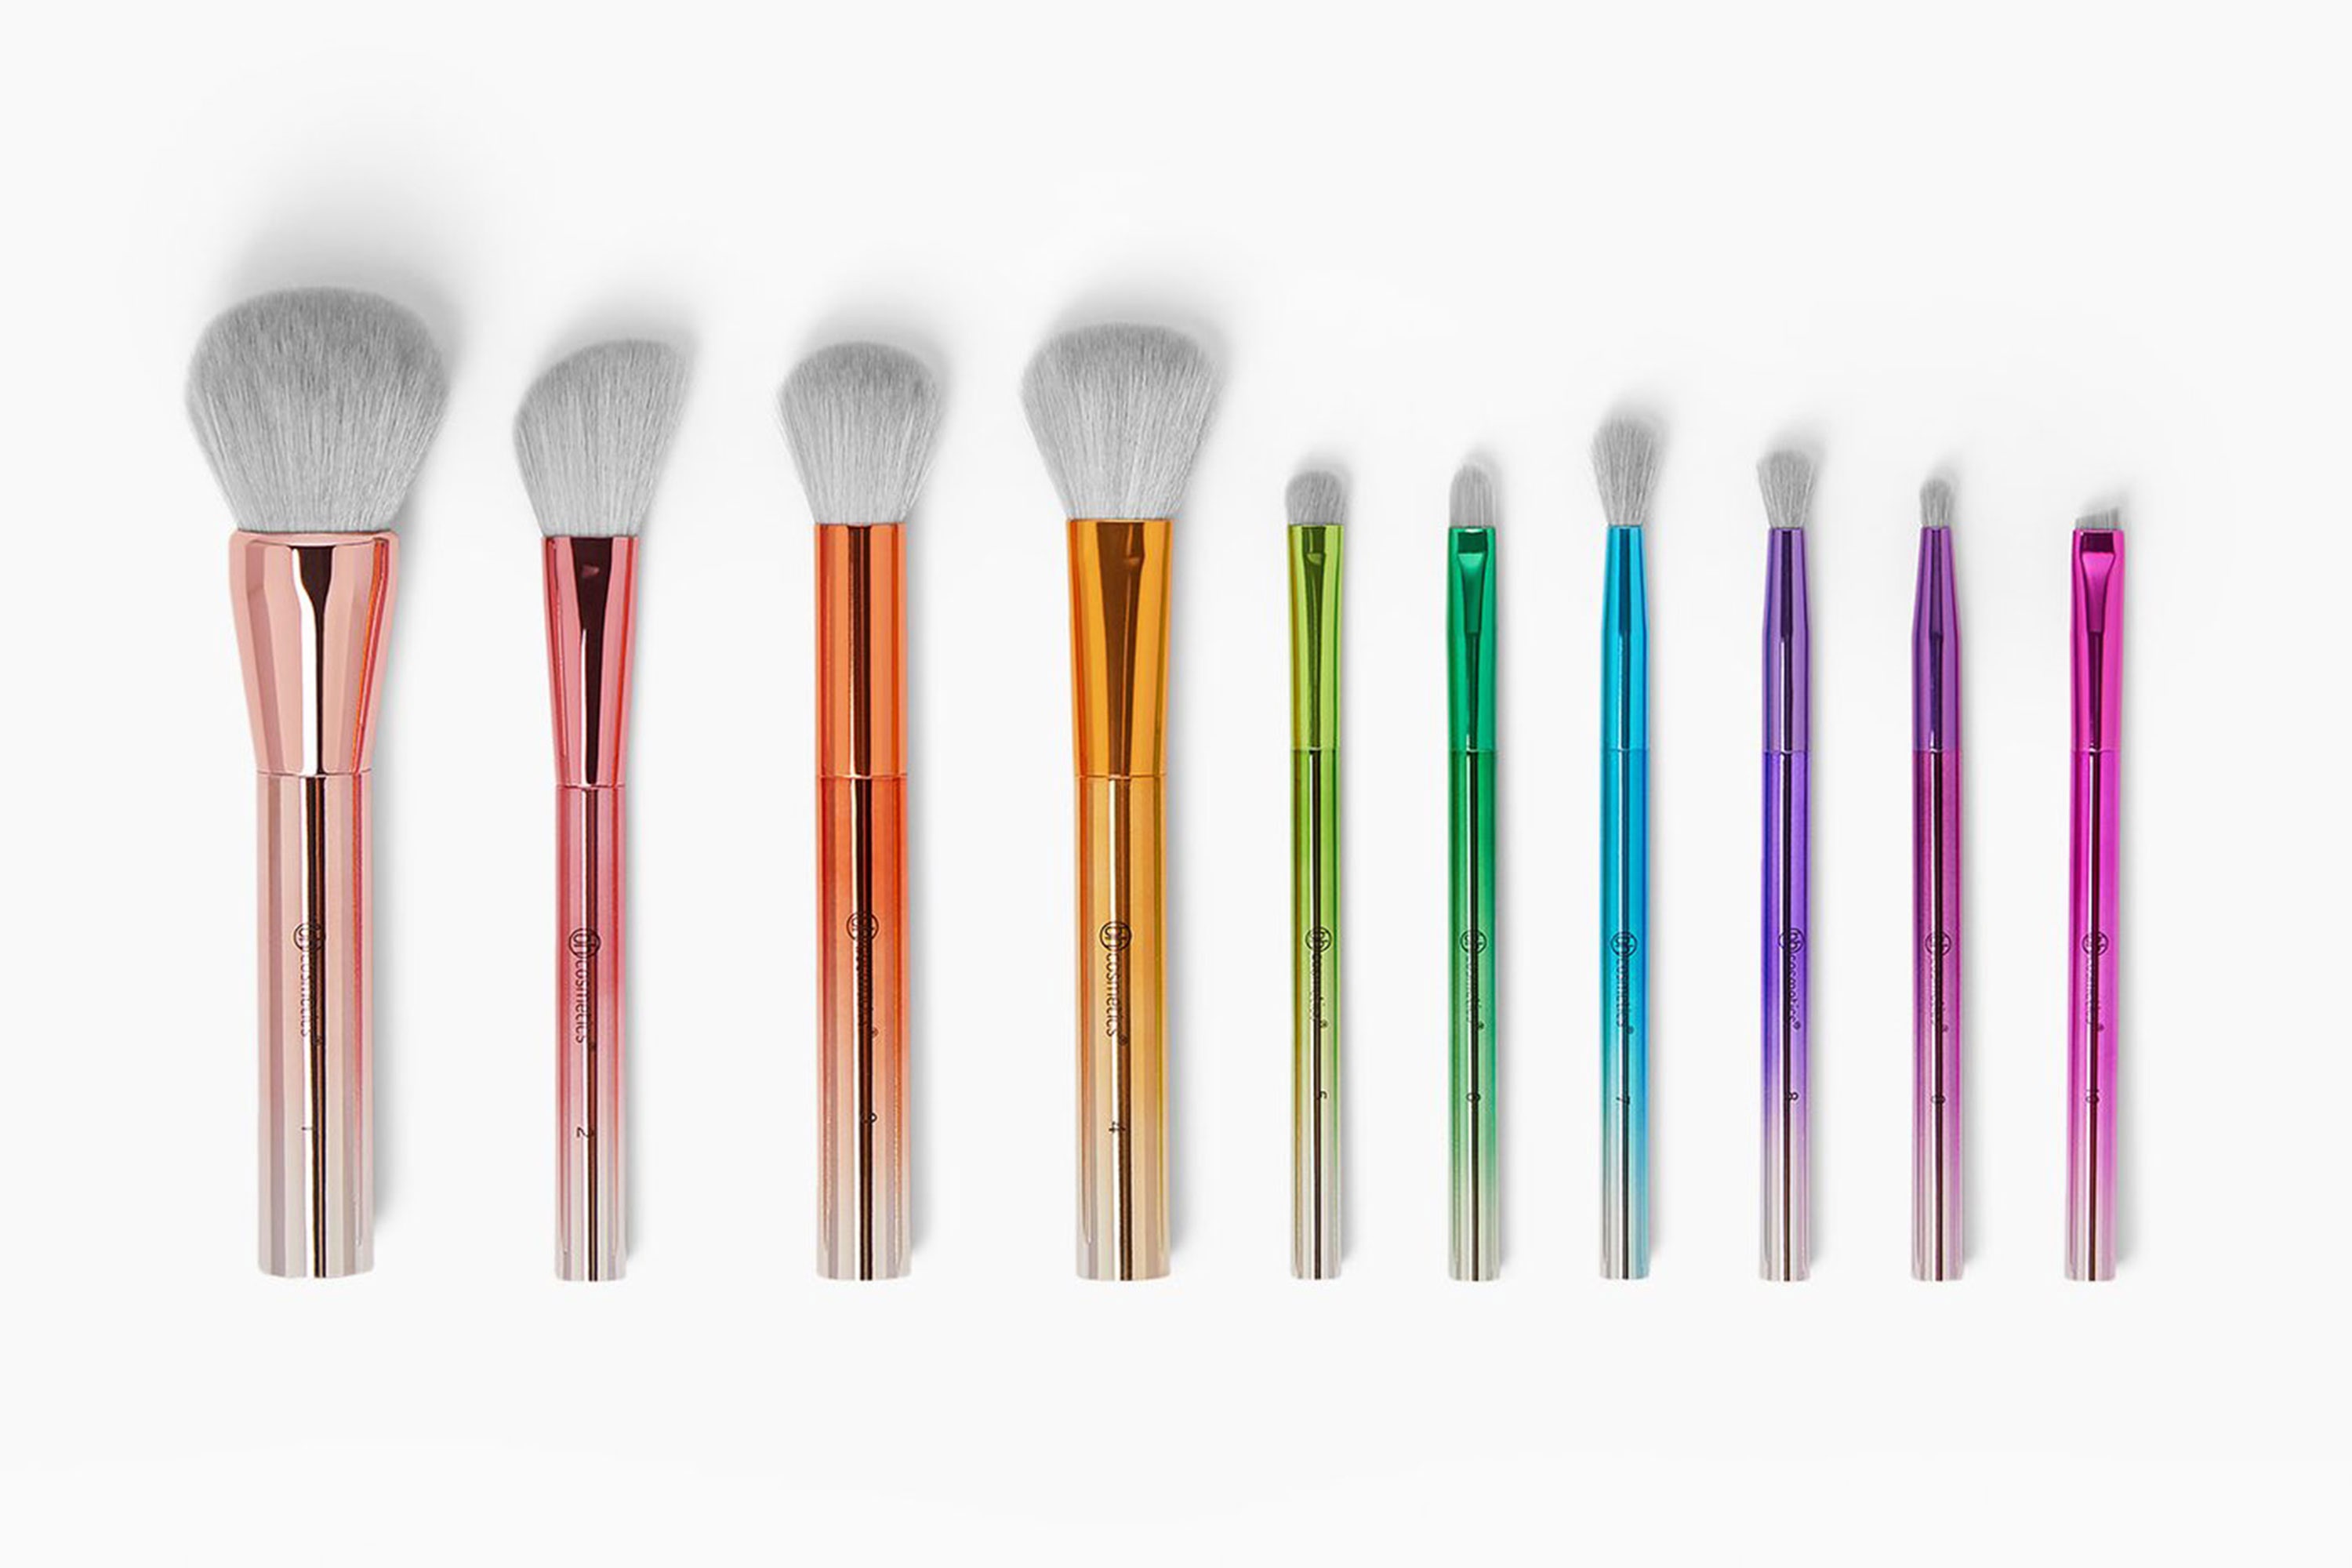 BH Cosmetics' New 10 Piece Rainbow Makeup Brush Set Is Just $22